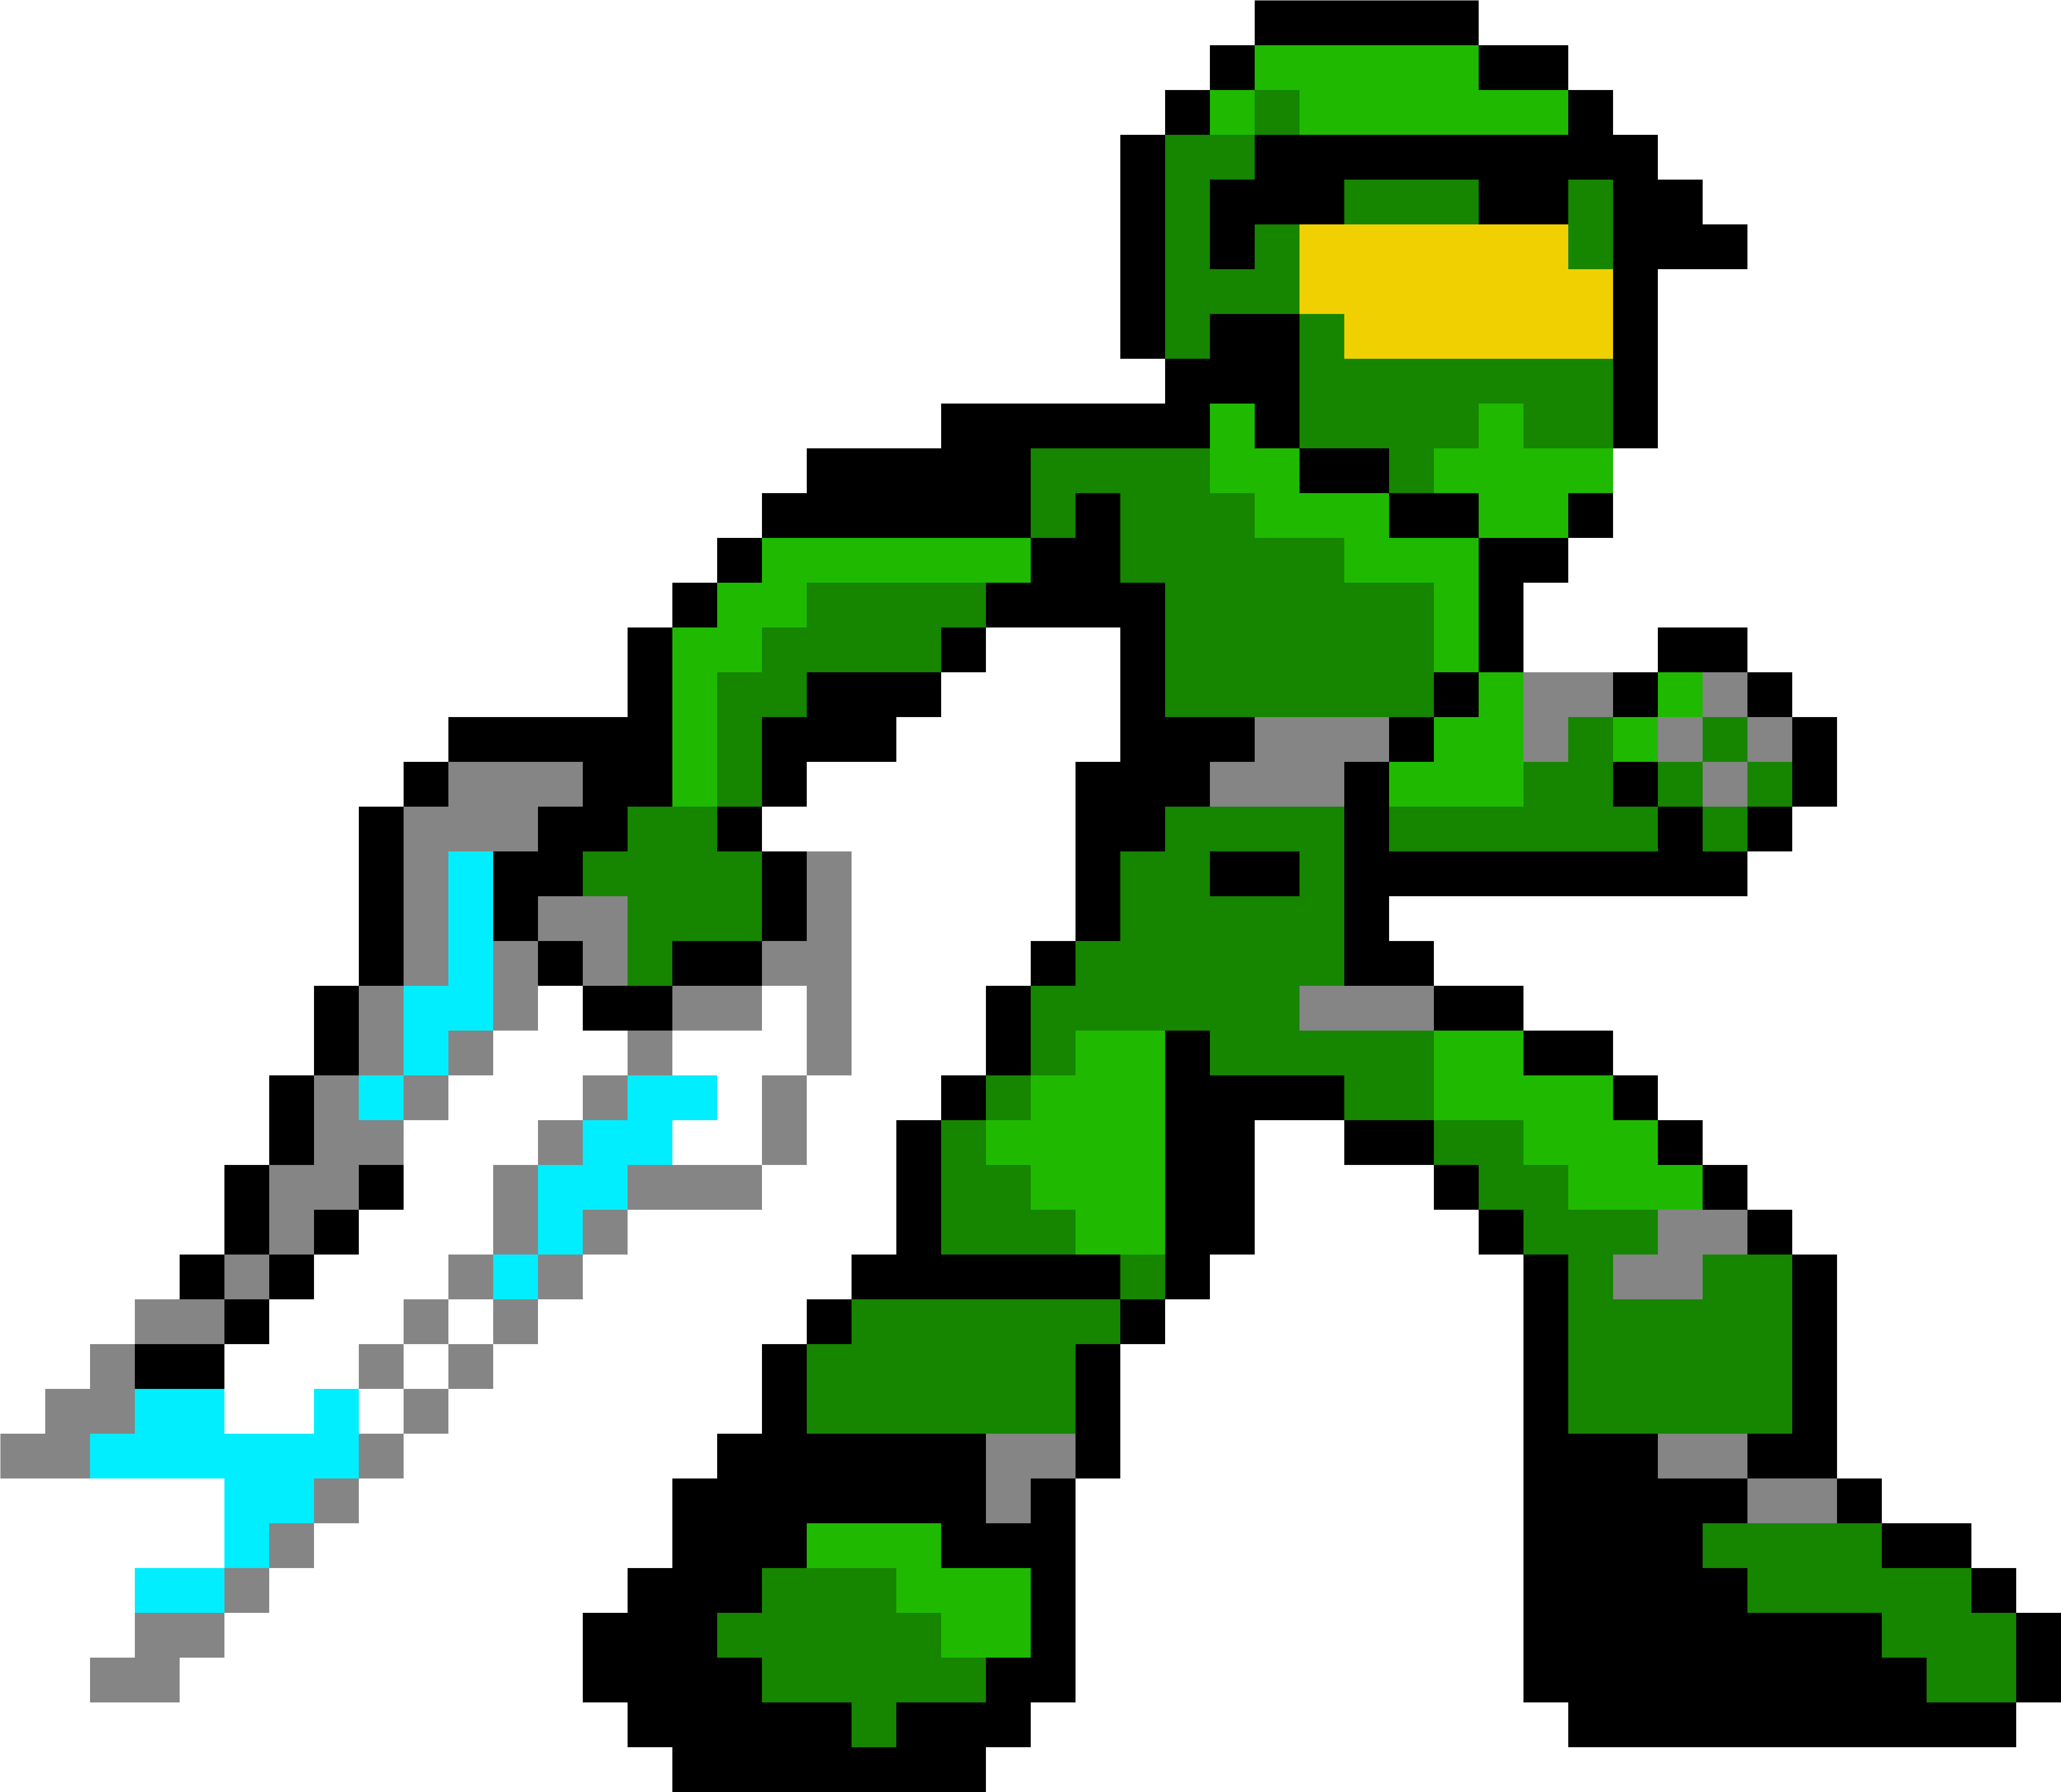 A Pixel Art Of A Green Character